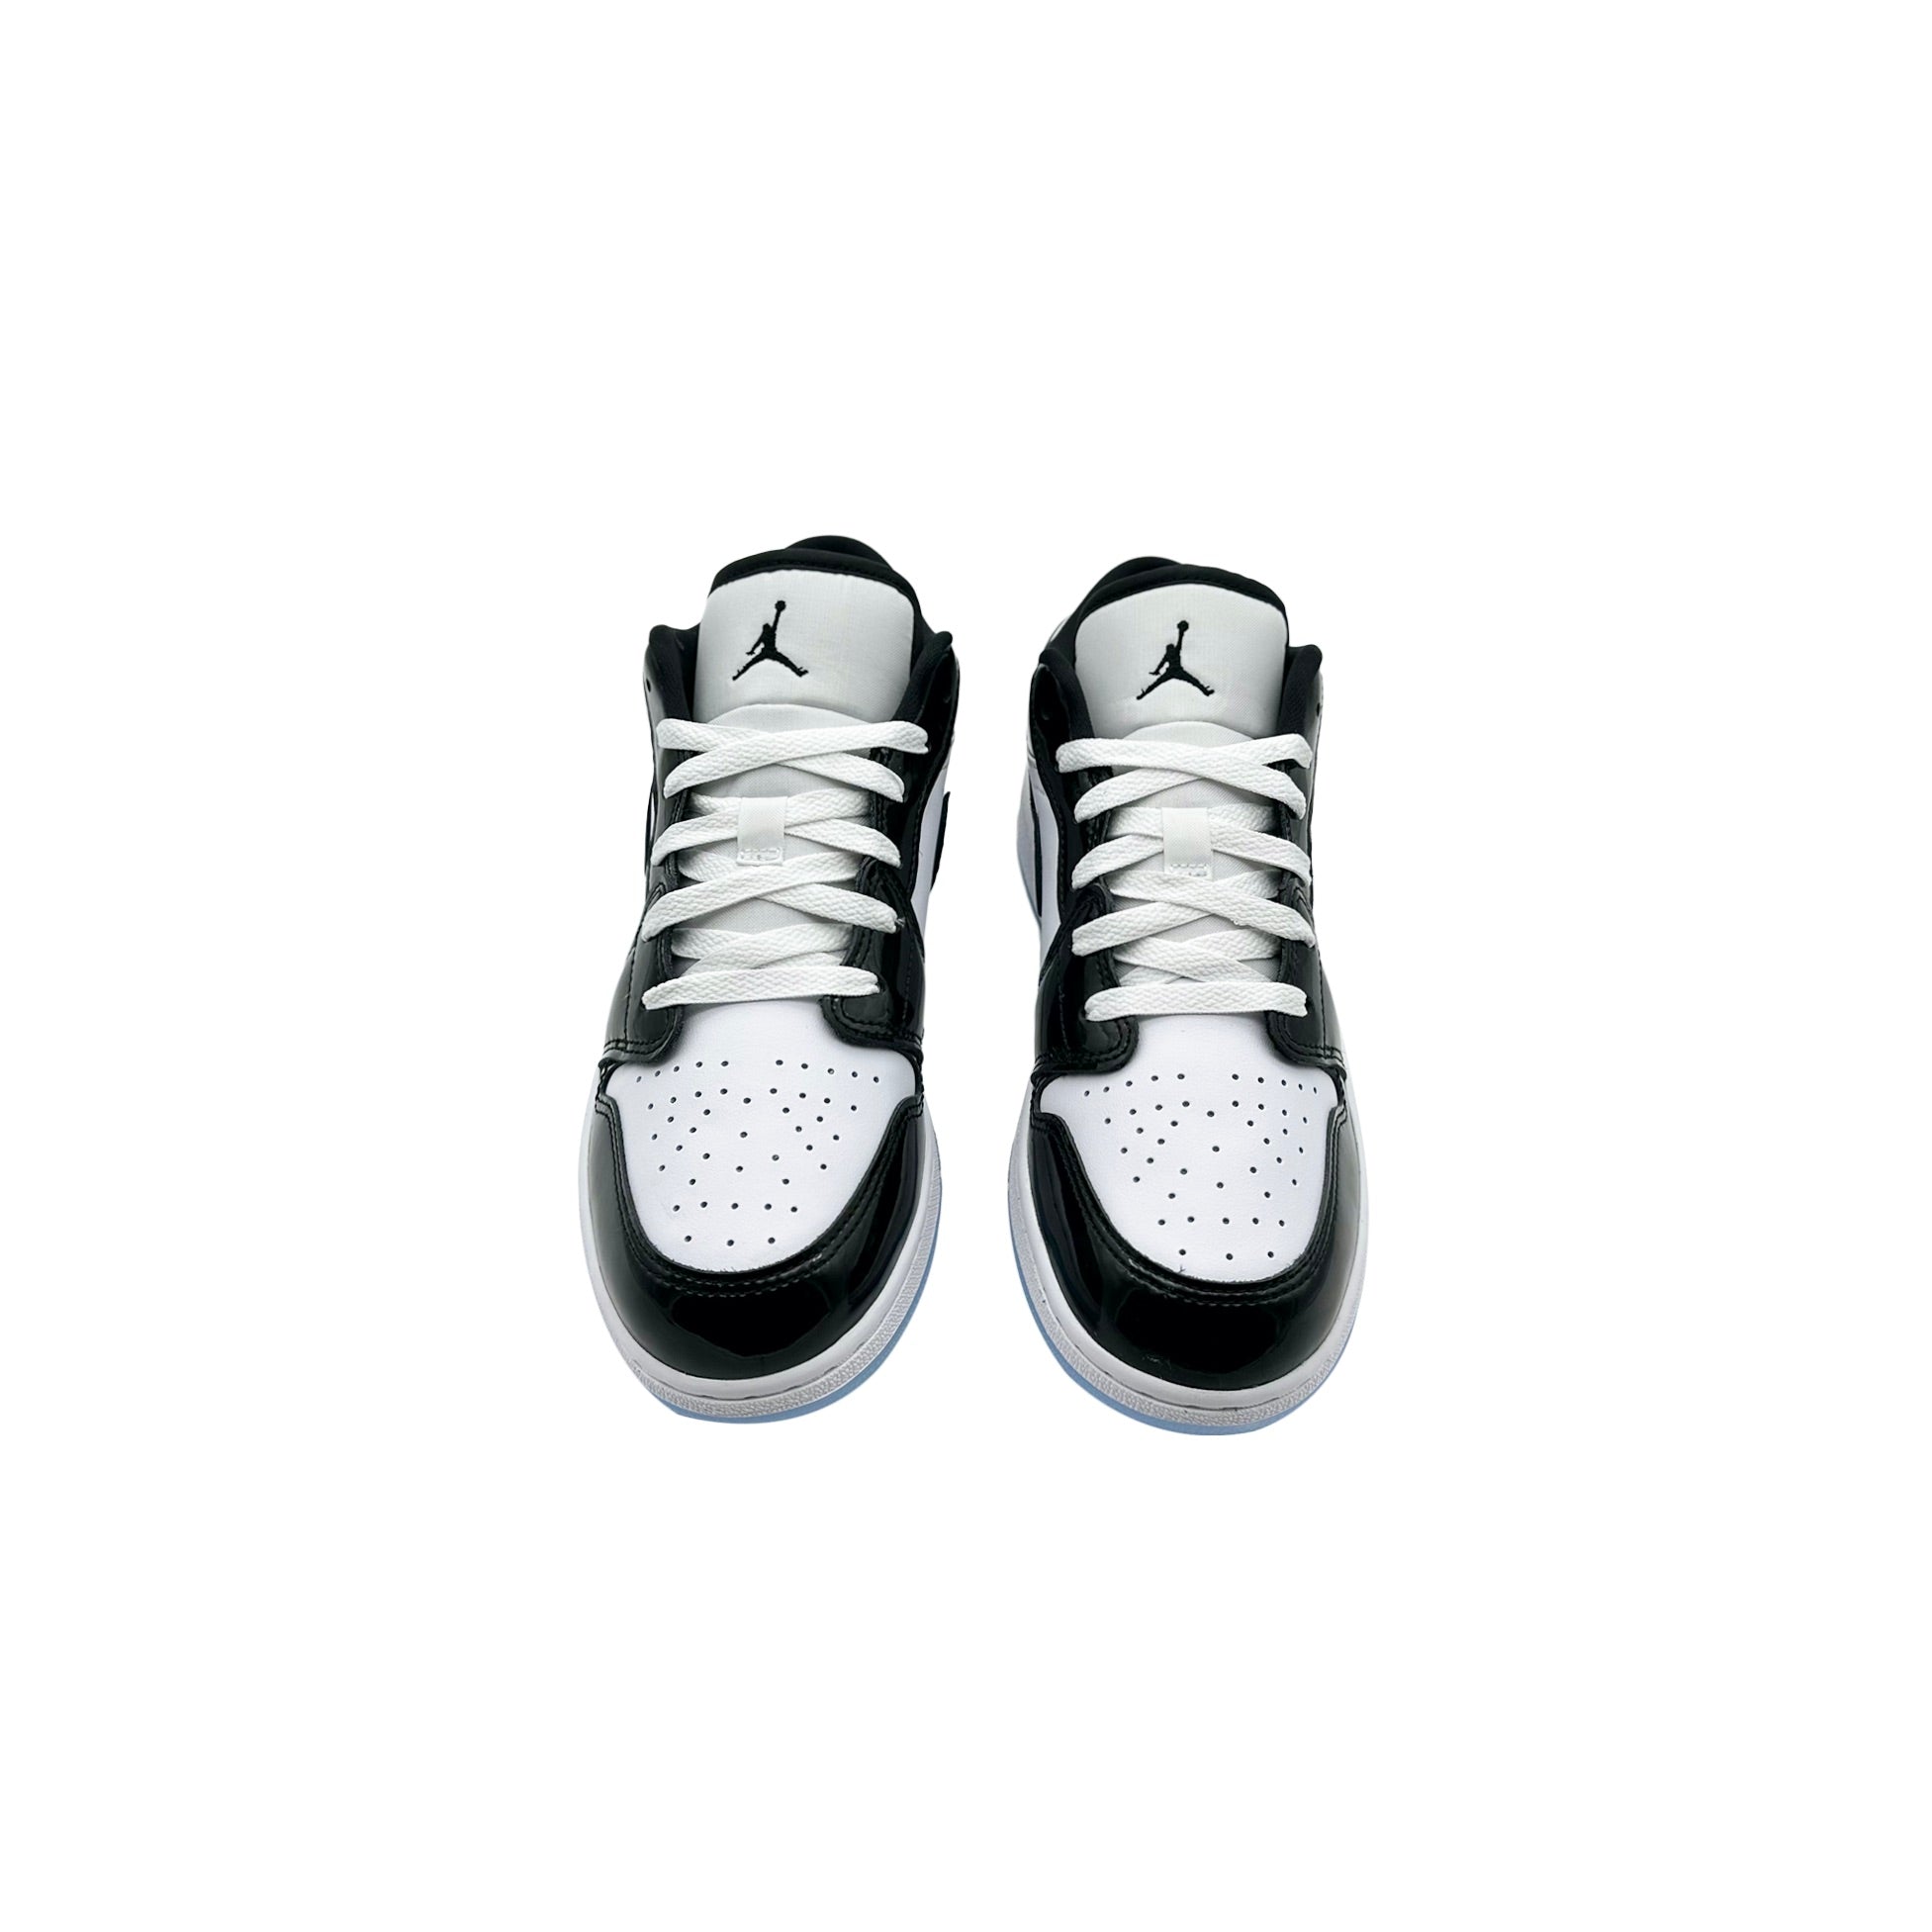 Nike Air Jordan 1 Low Concord Black White GS